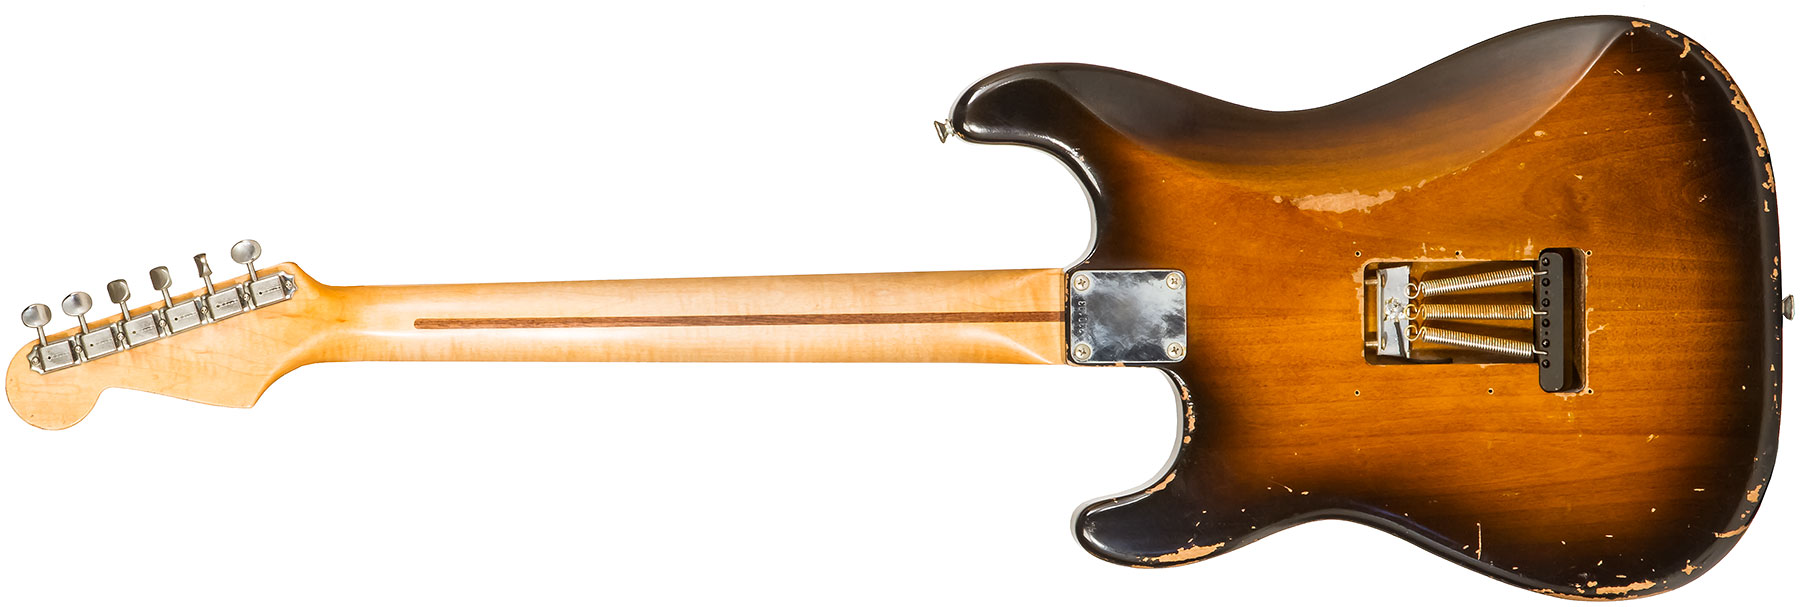 Rebelrelic S-series 54 3s Trem Mn #230103 - Medium Aged 2-tone Sunburst - E-Gitarre in Str-Form - Variation 1